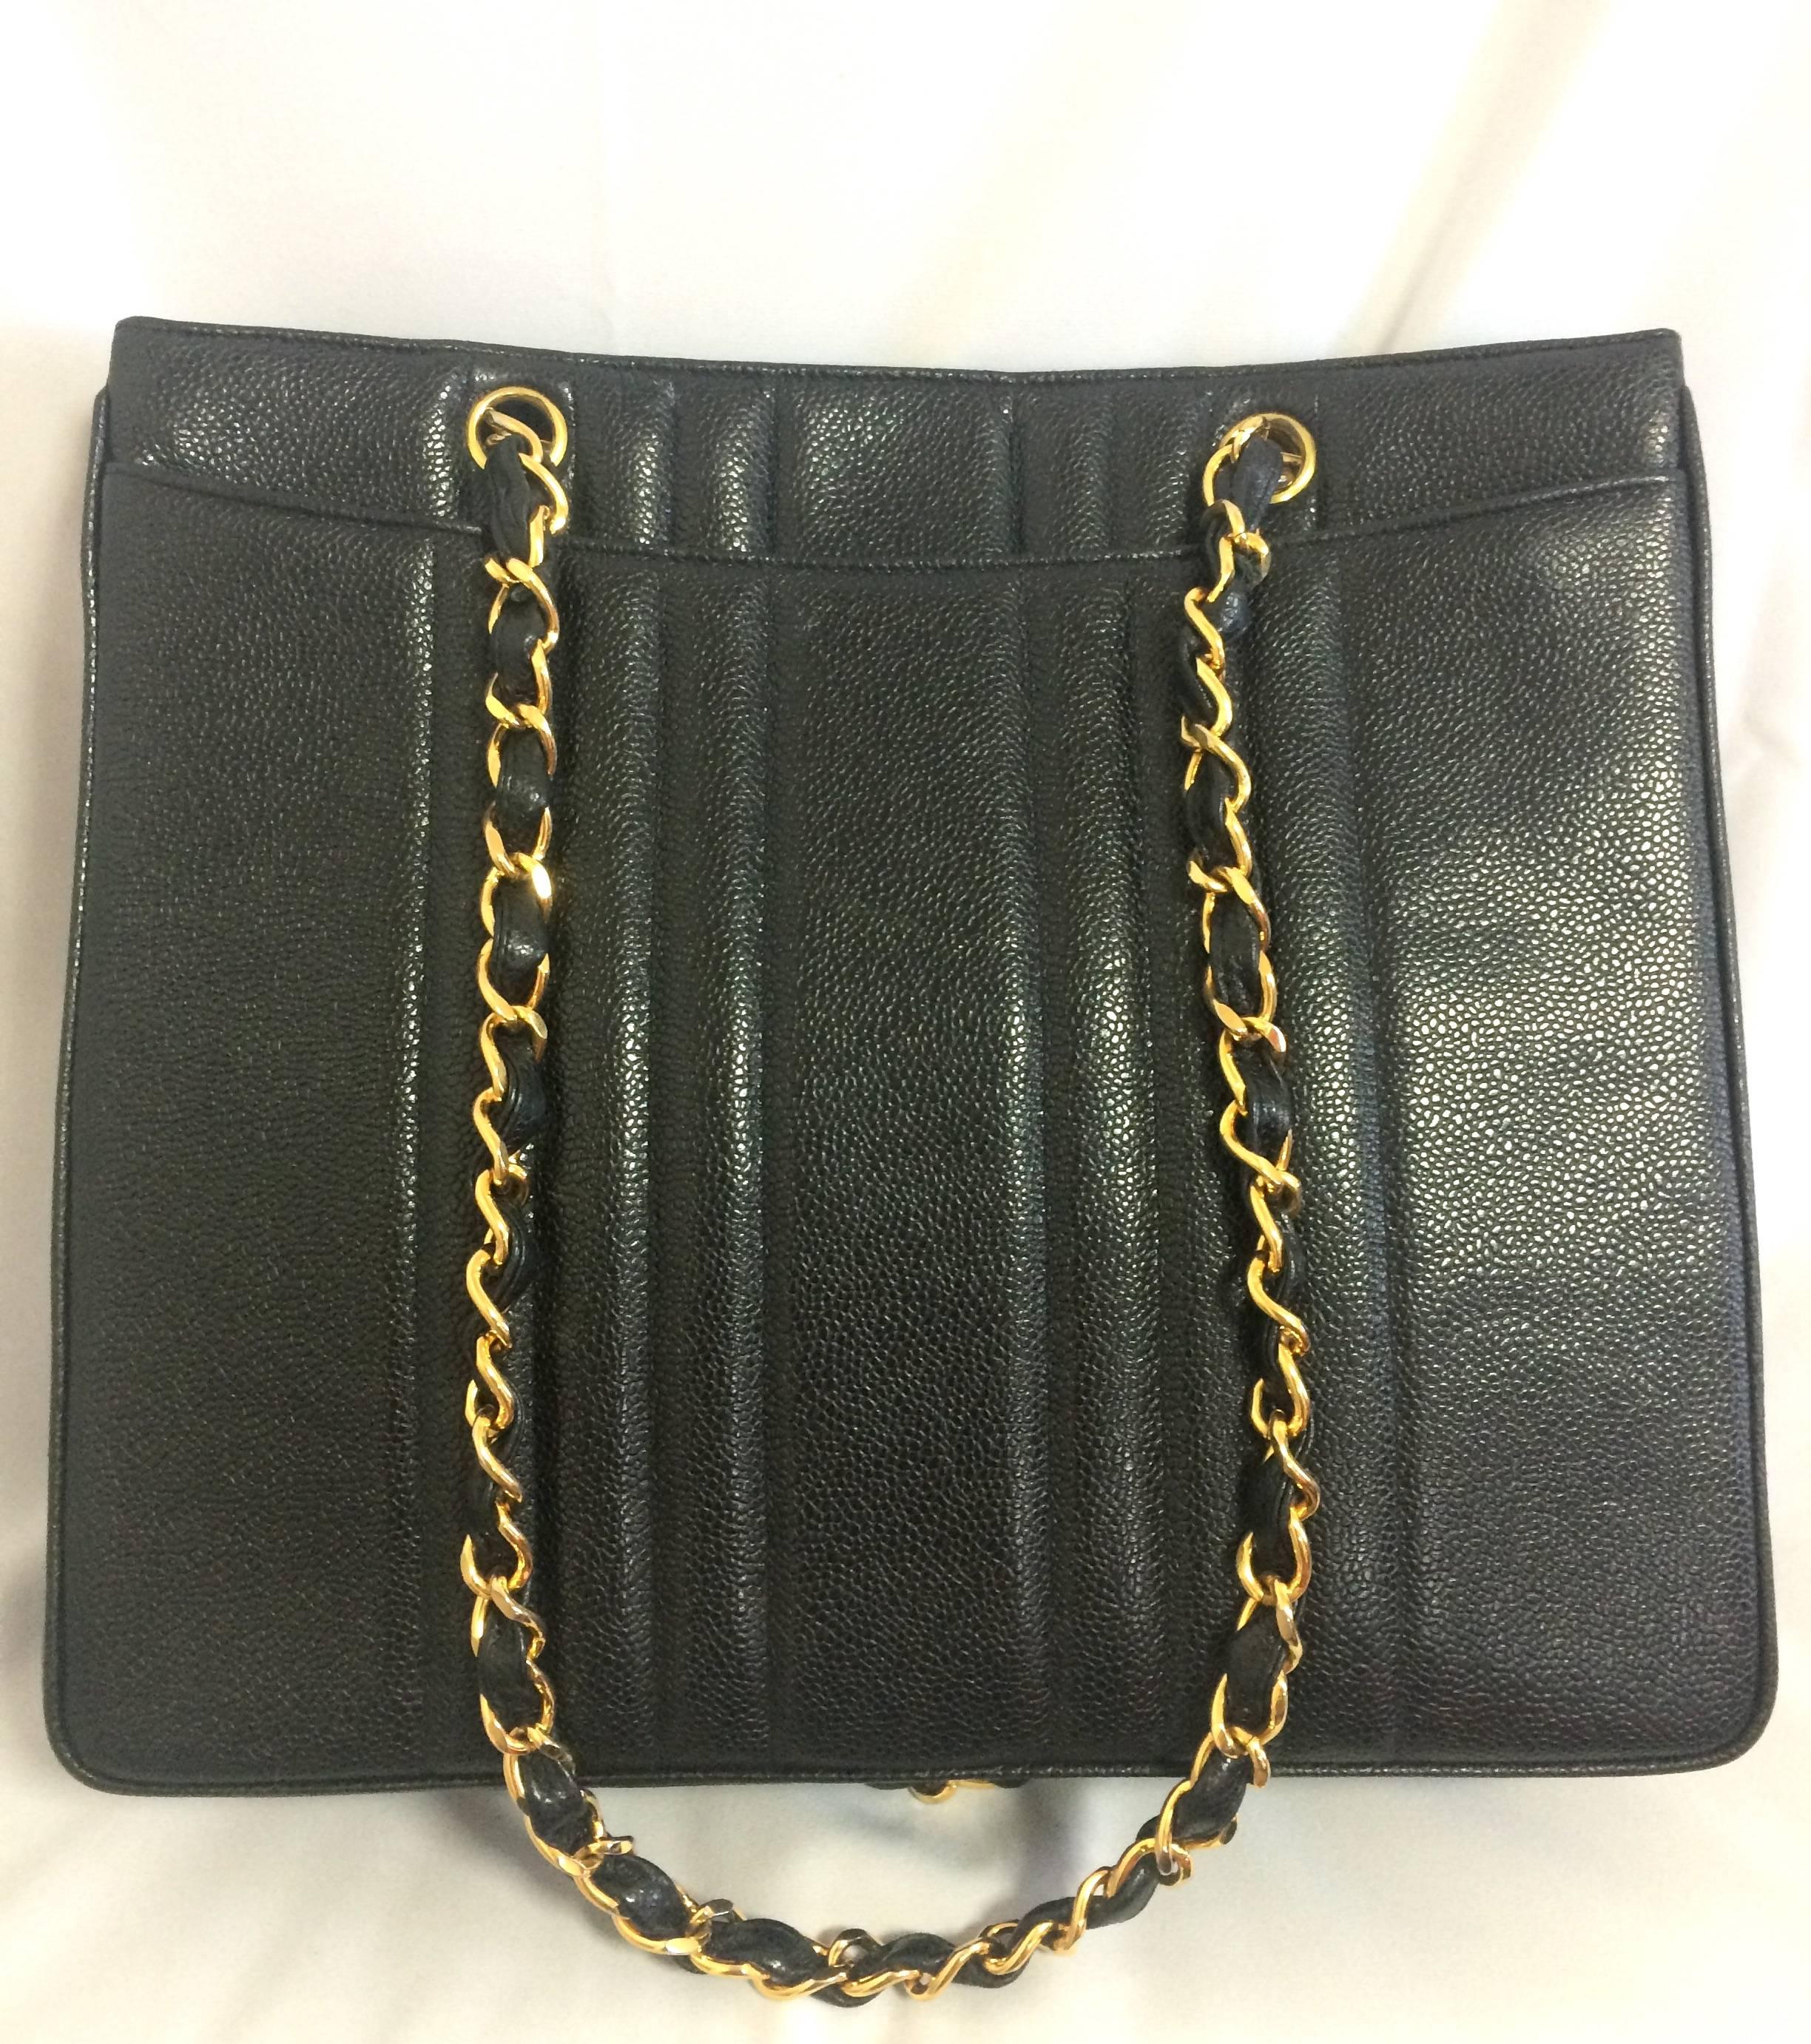 Black Vintage CHANEL rare 2.55 combo design black caviar leather chain shoulder bag.